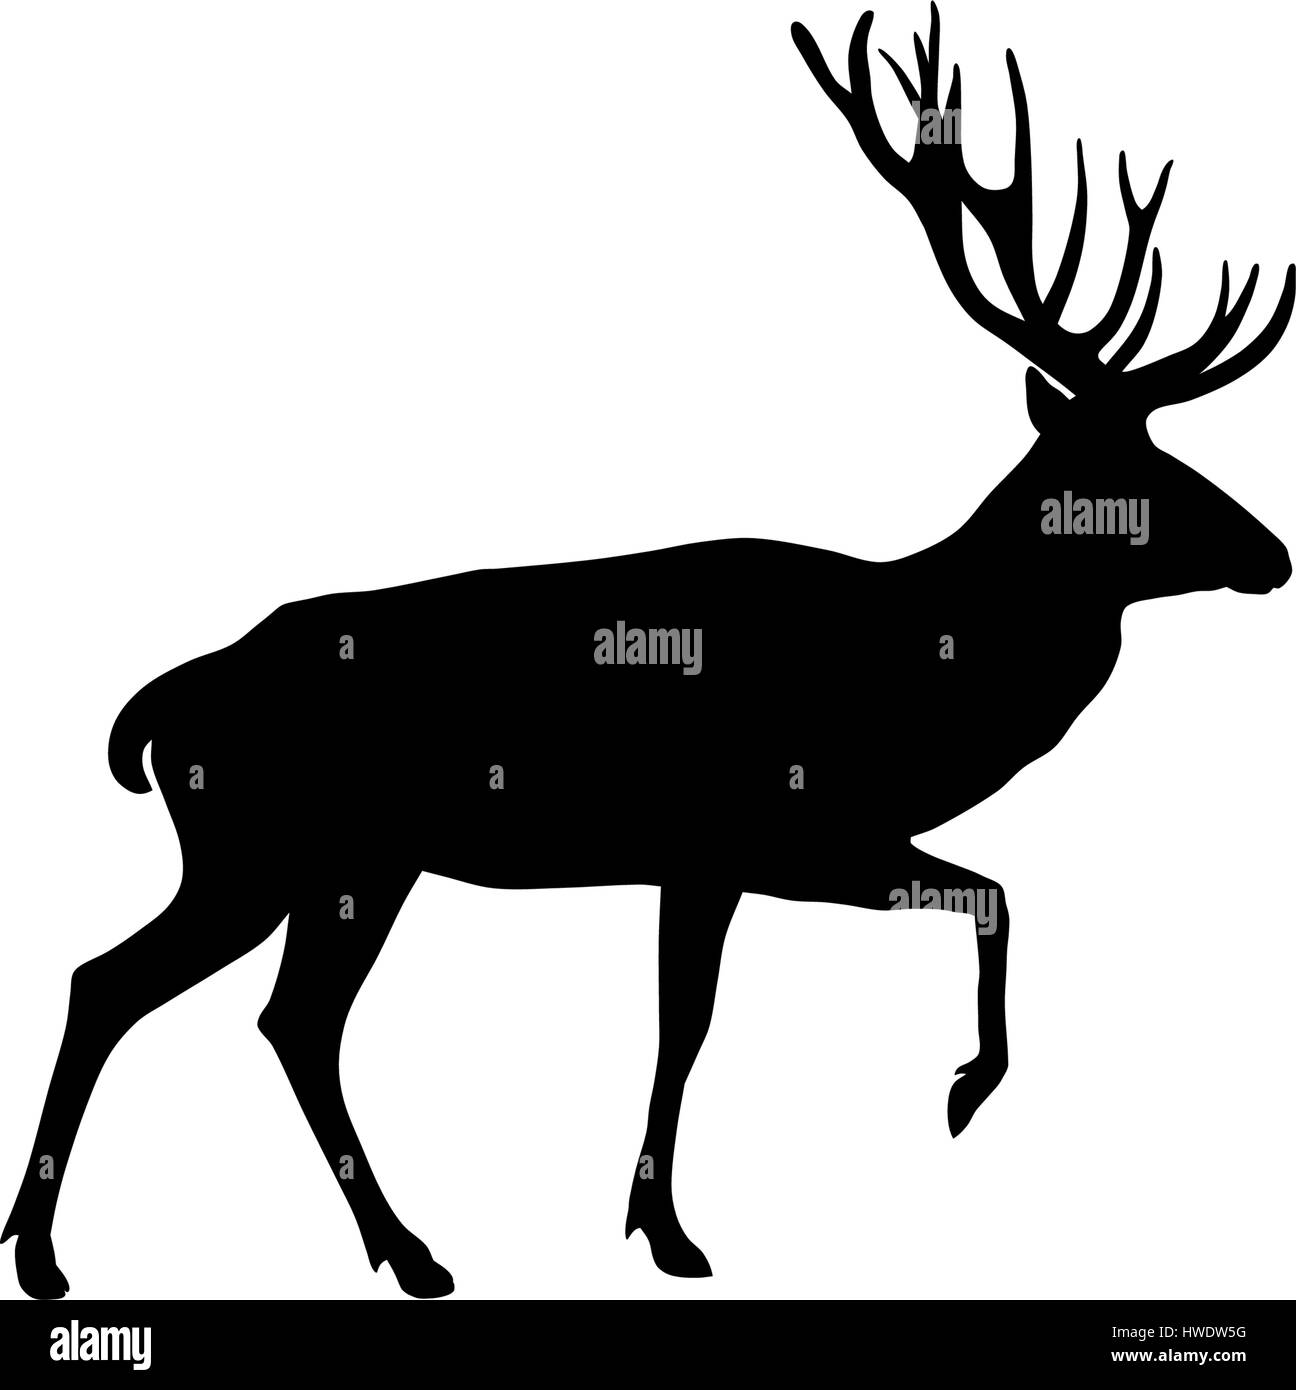 Vector illustration of deer silhouette Illustration de Vecteur